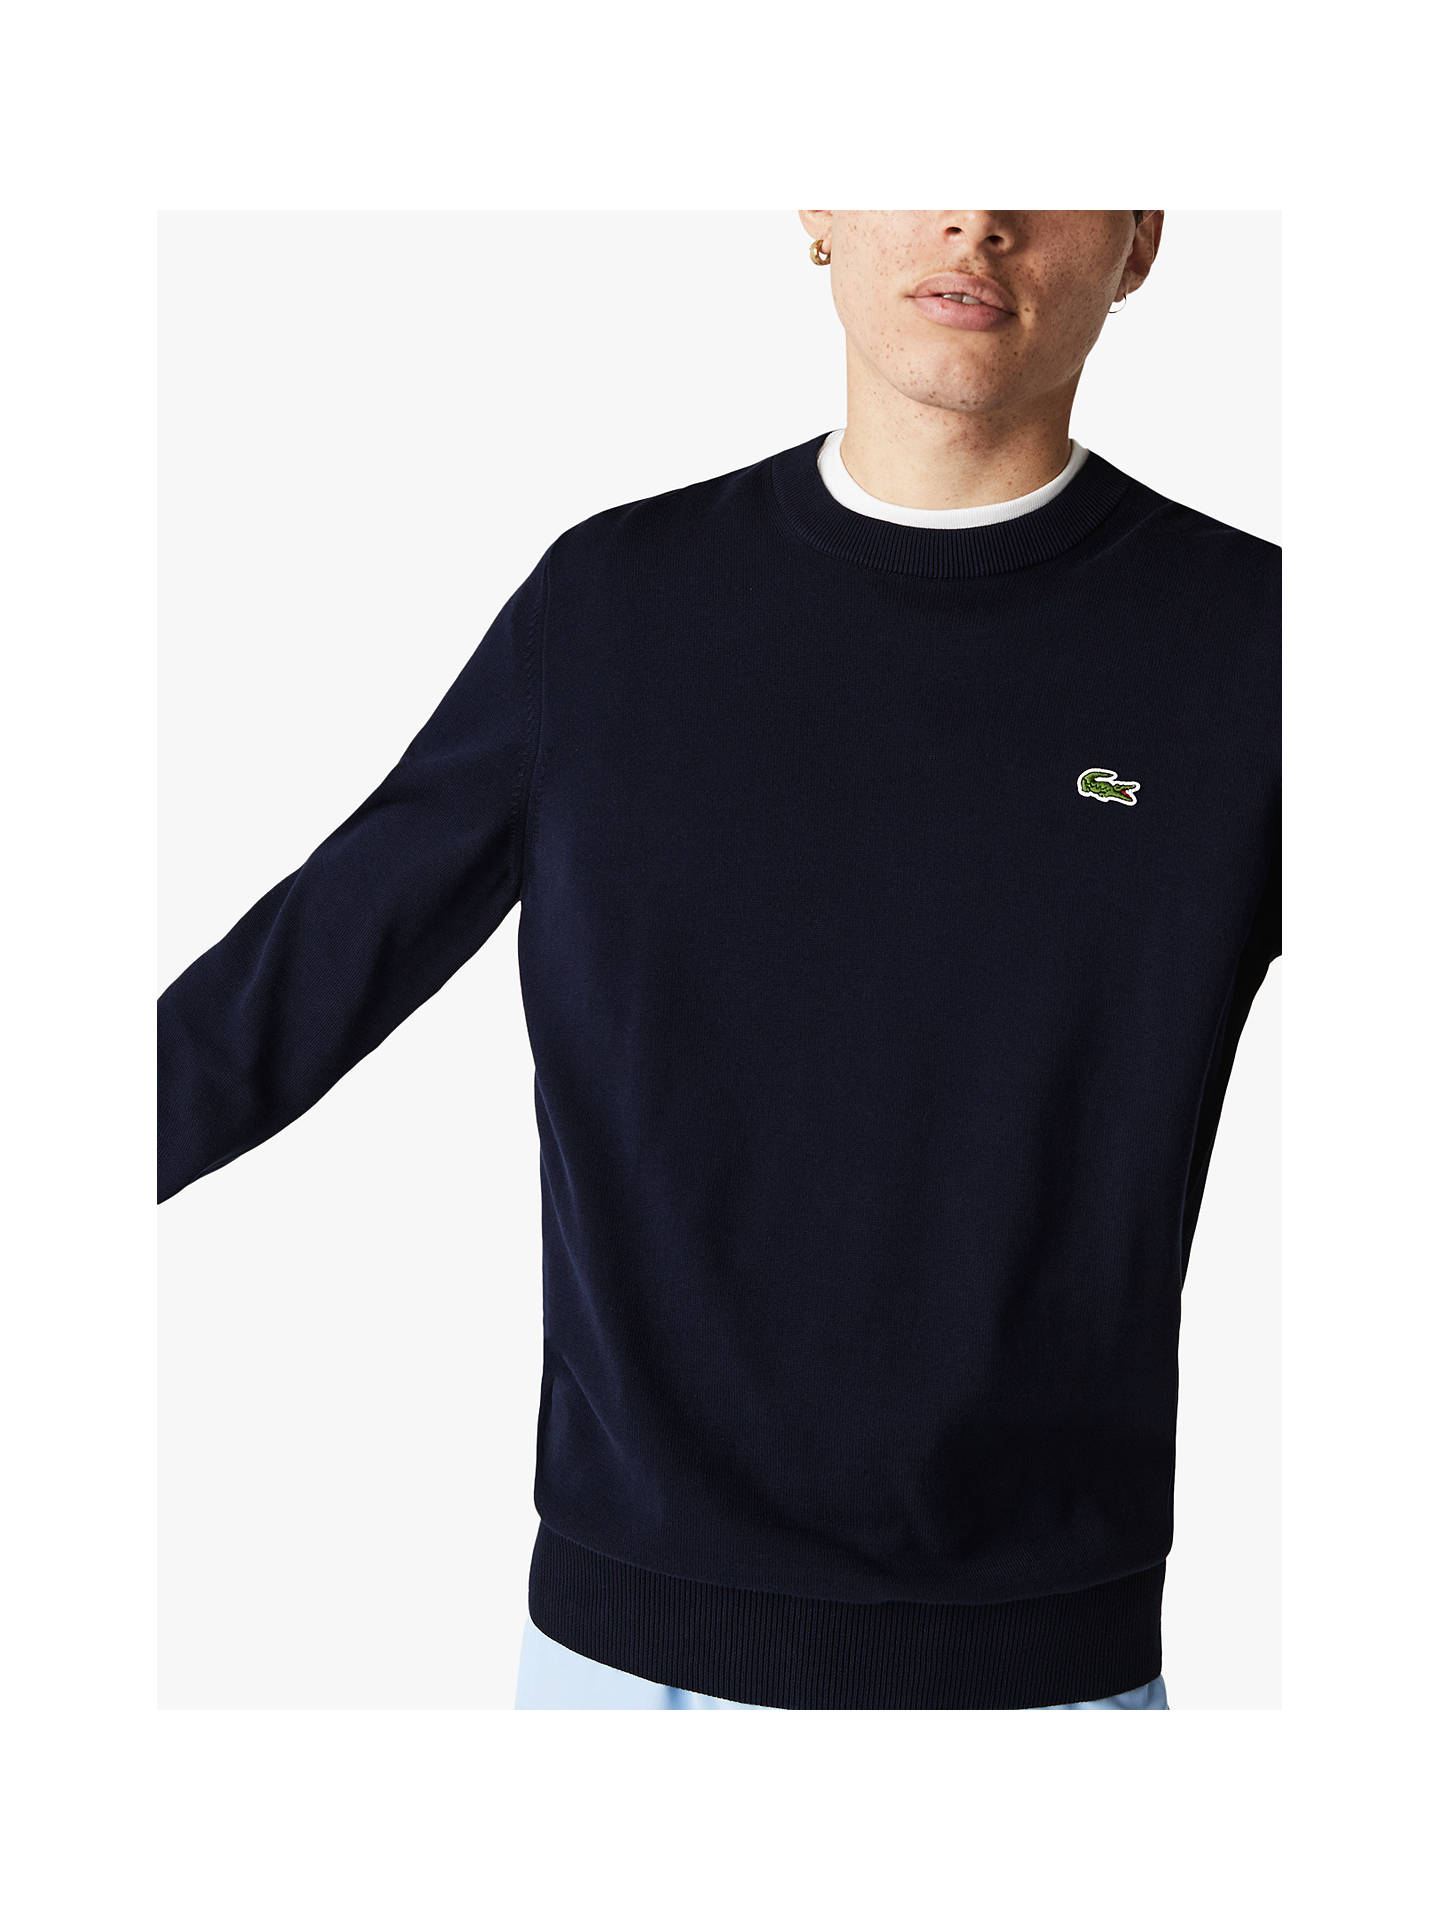 Lacoste Classic Cotton Sweatshirt at John Lewis & Partners